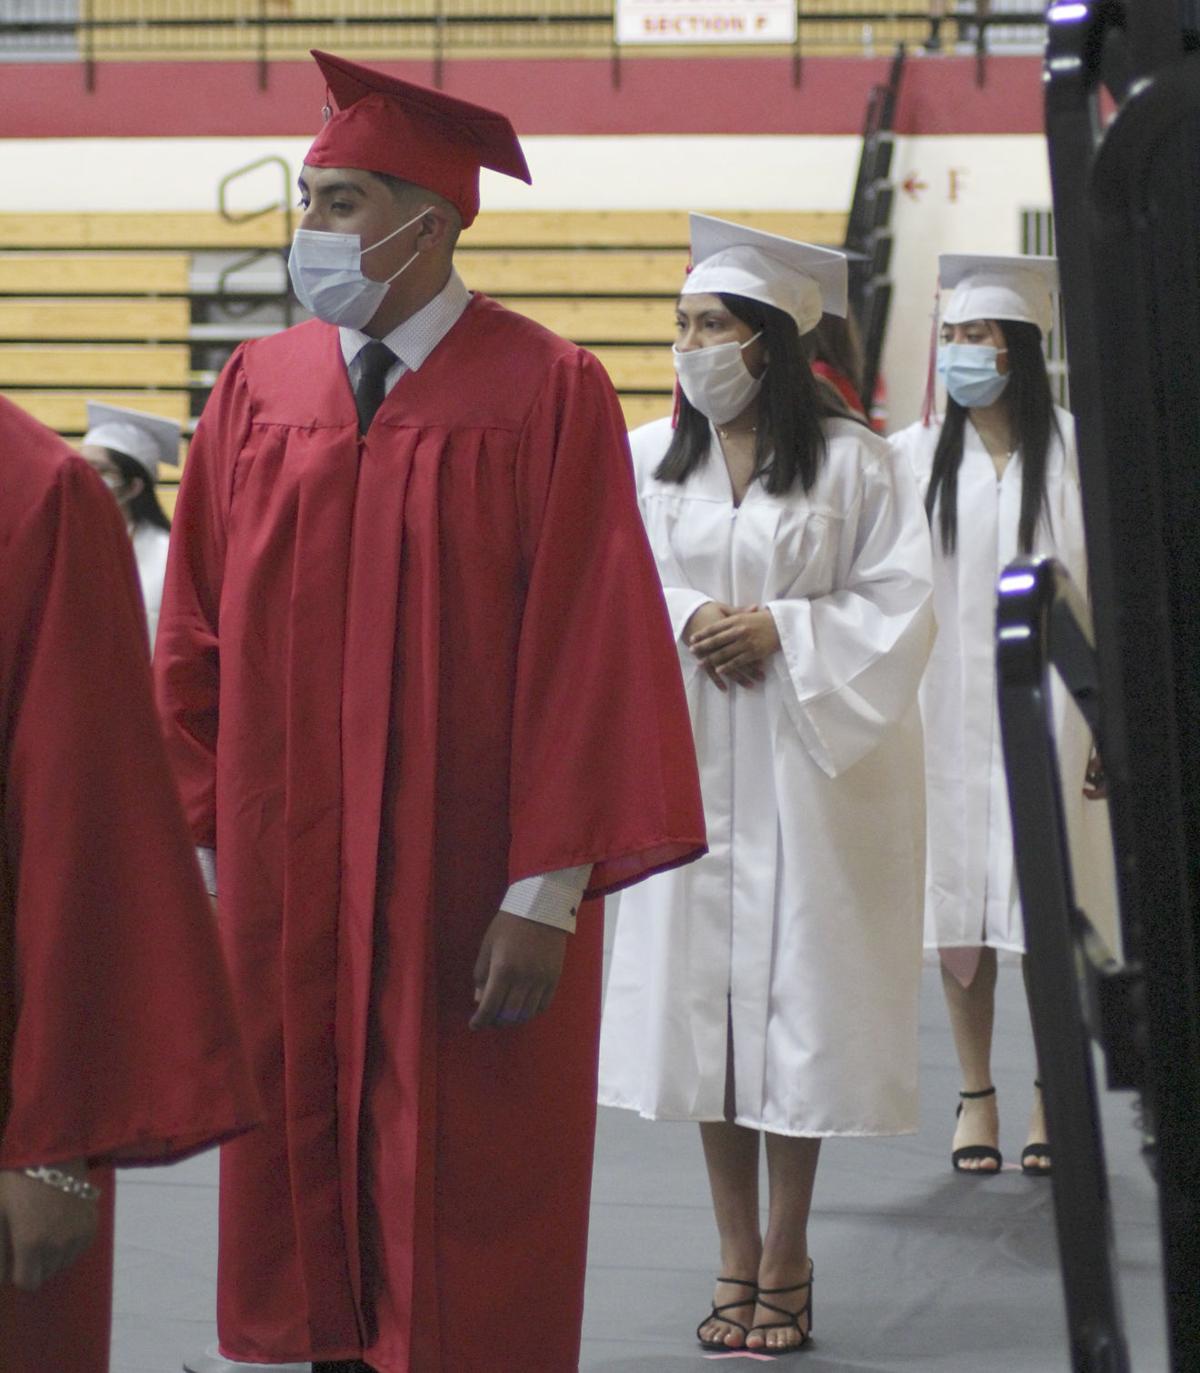 Goshen High School celebrates 2020 graduates | News | goshennews.com